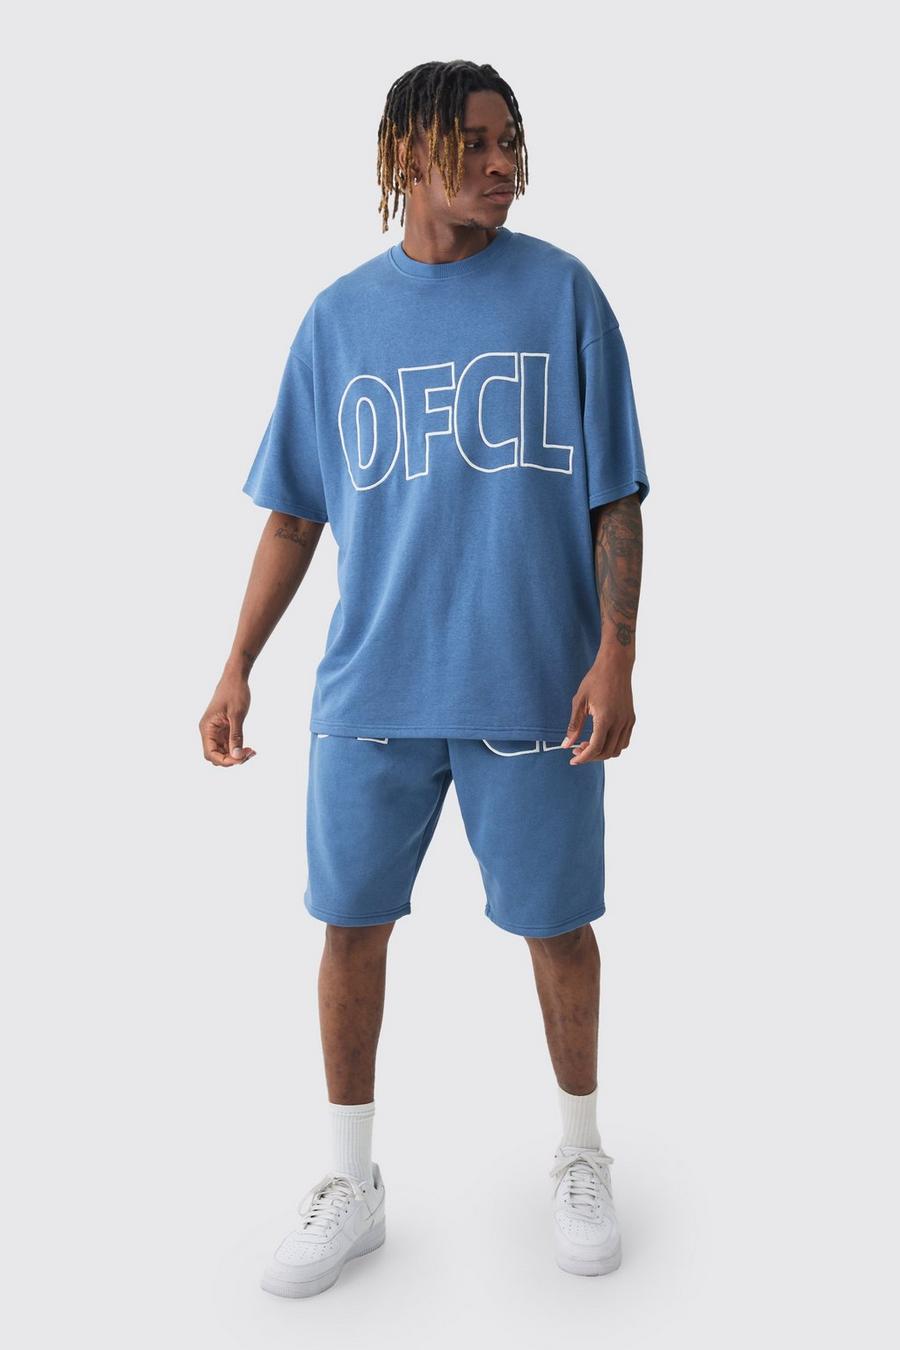 Slate blue Tall Oversized Ofcl Applique T-shirt & Short Set